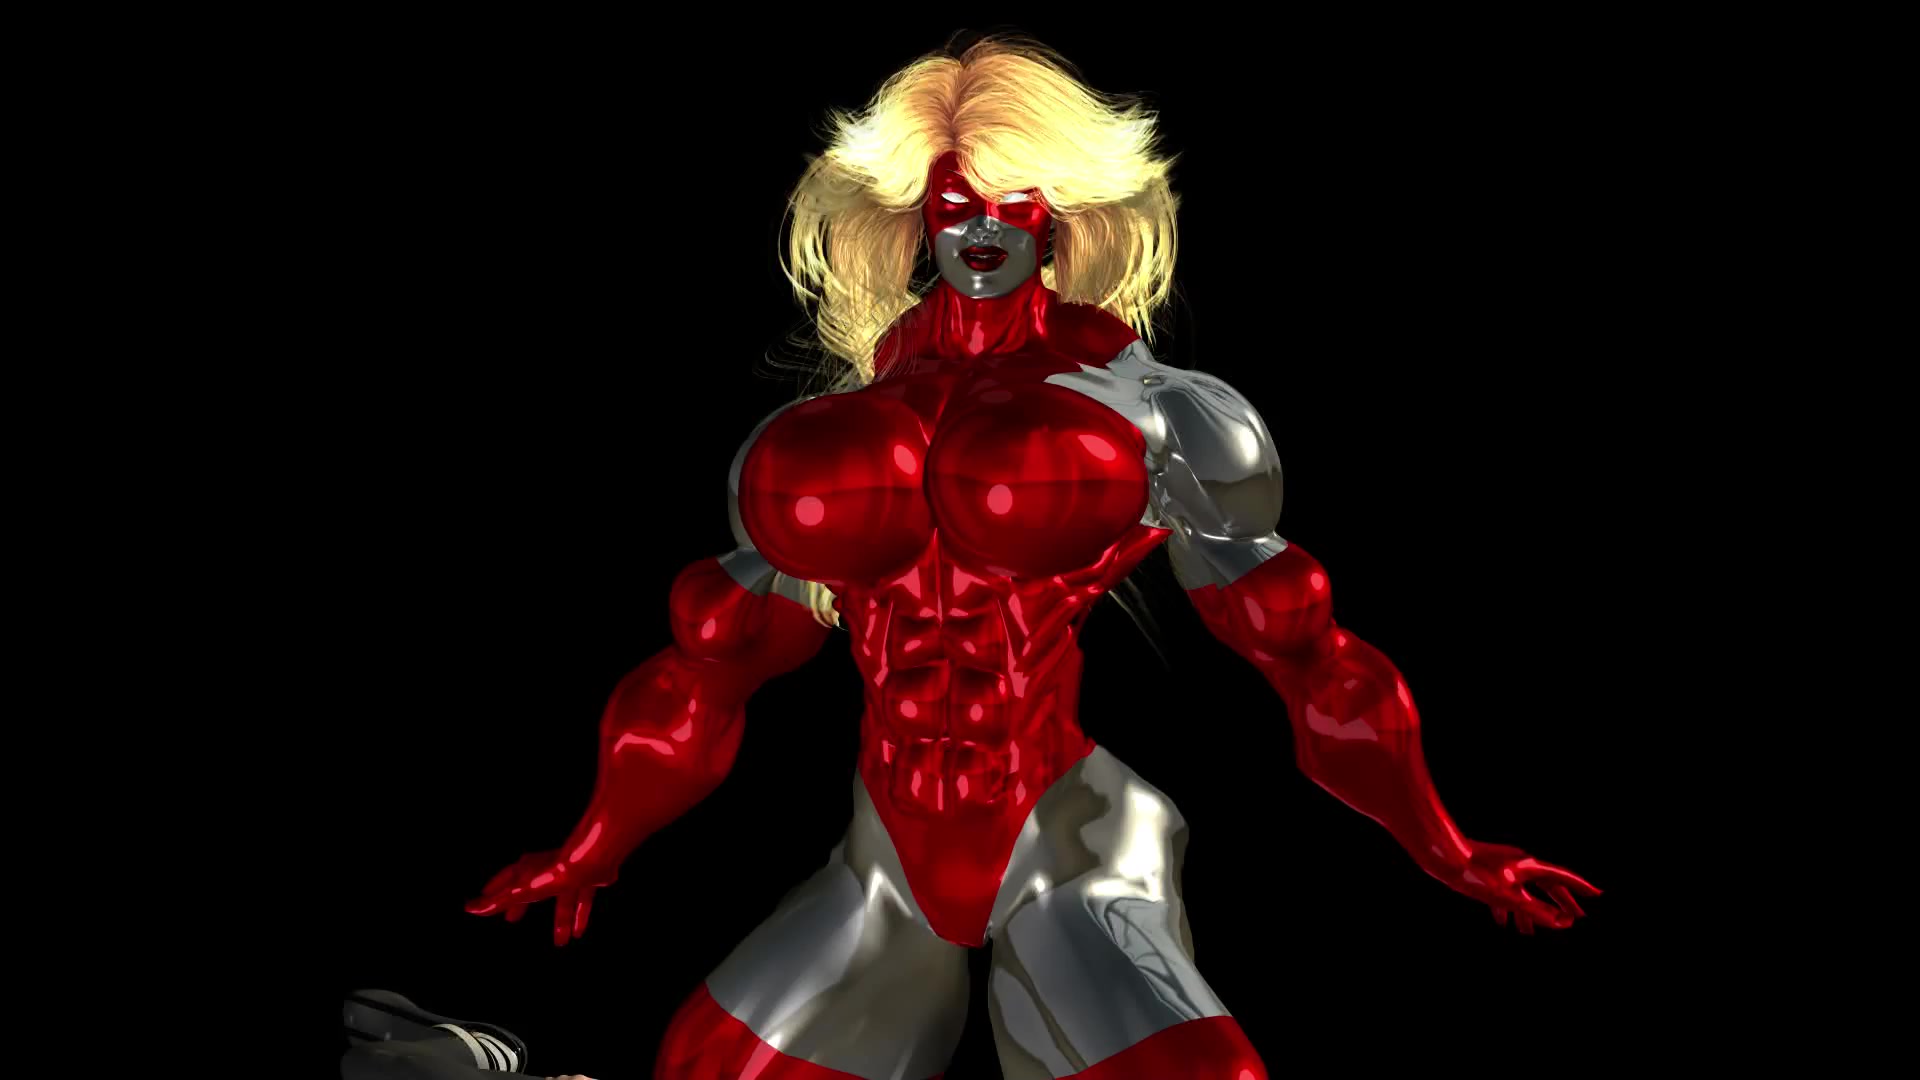 Super muscular blonde bicep babe boobies tits titties jugs - Playground